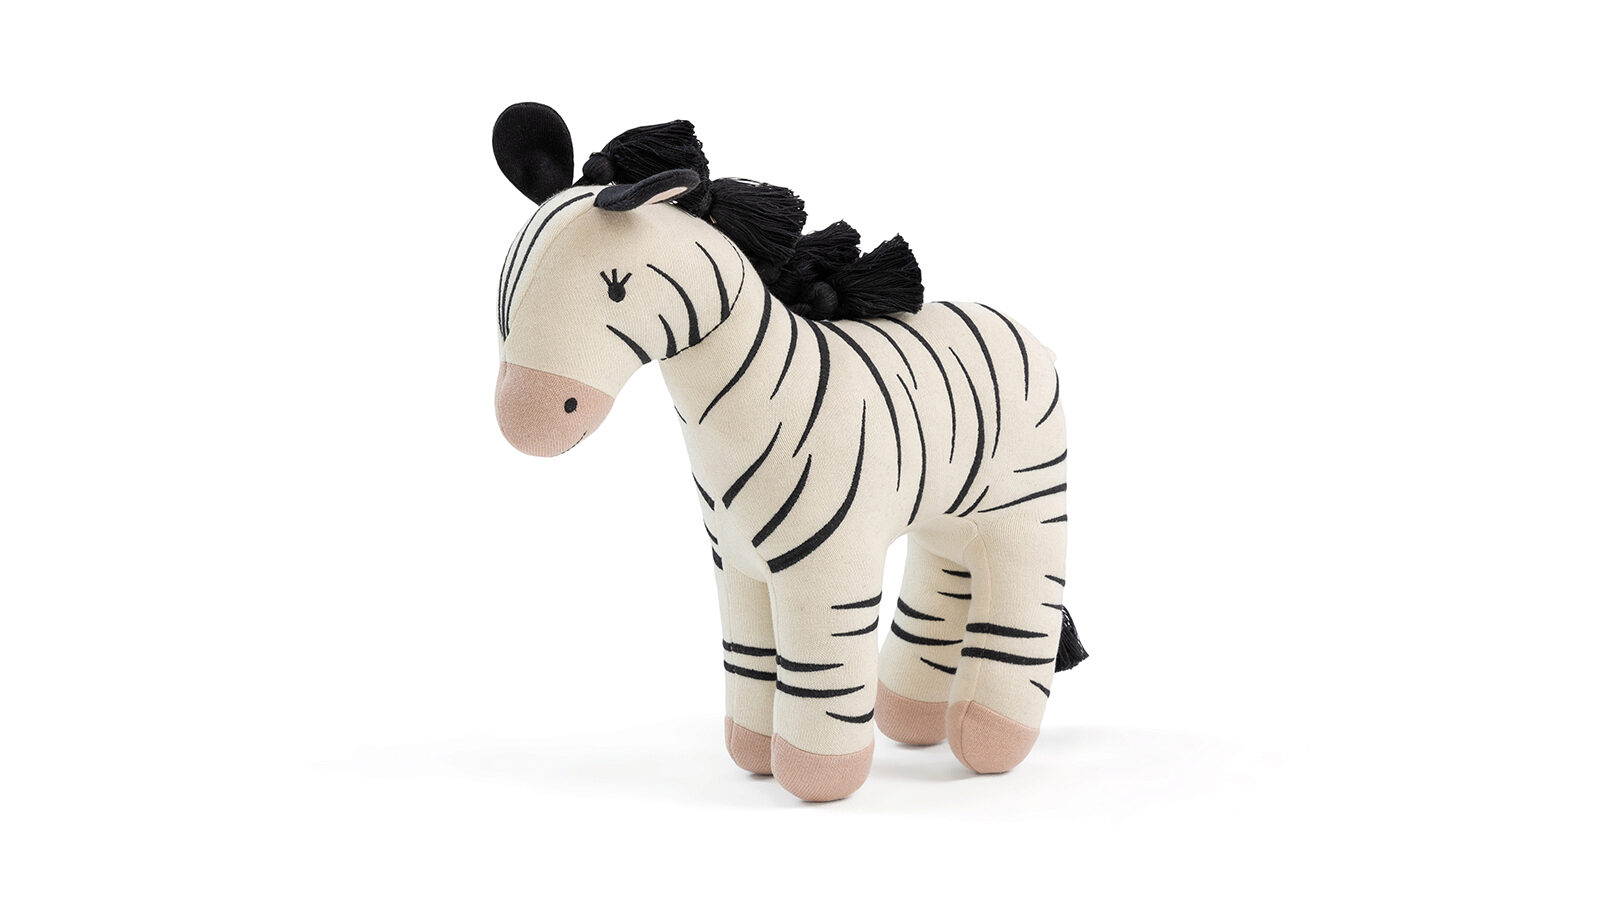 Игрушка Zebra игрушка заводная ослик